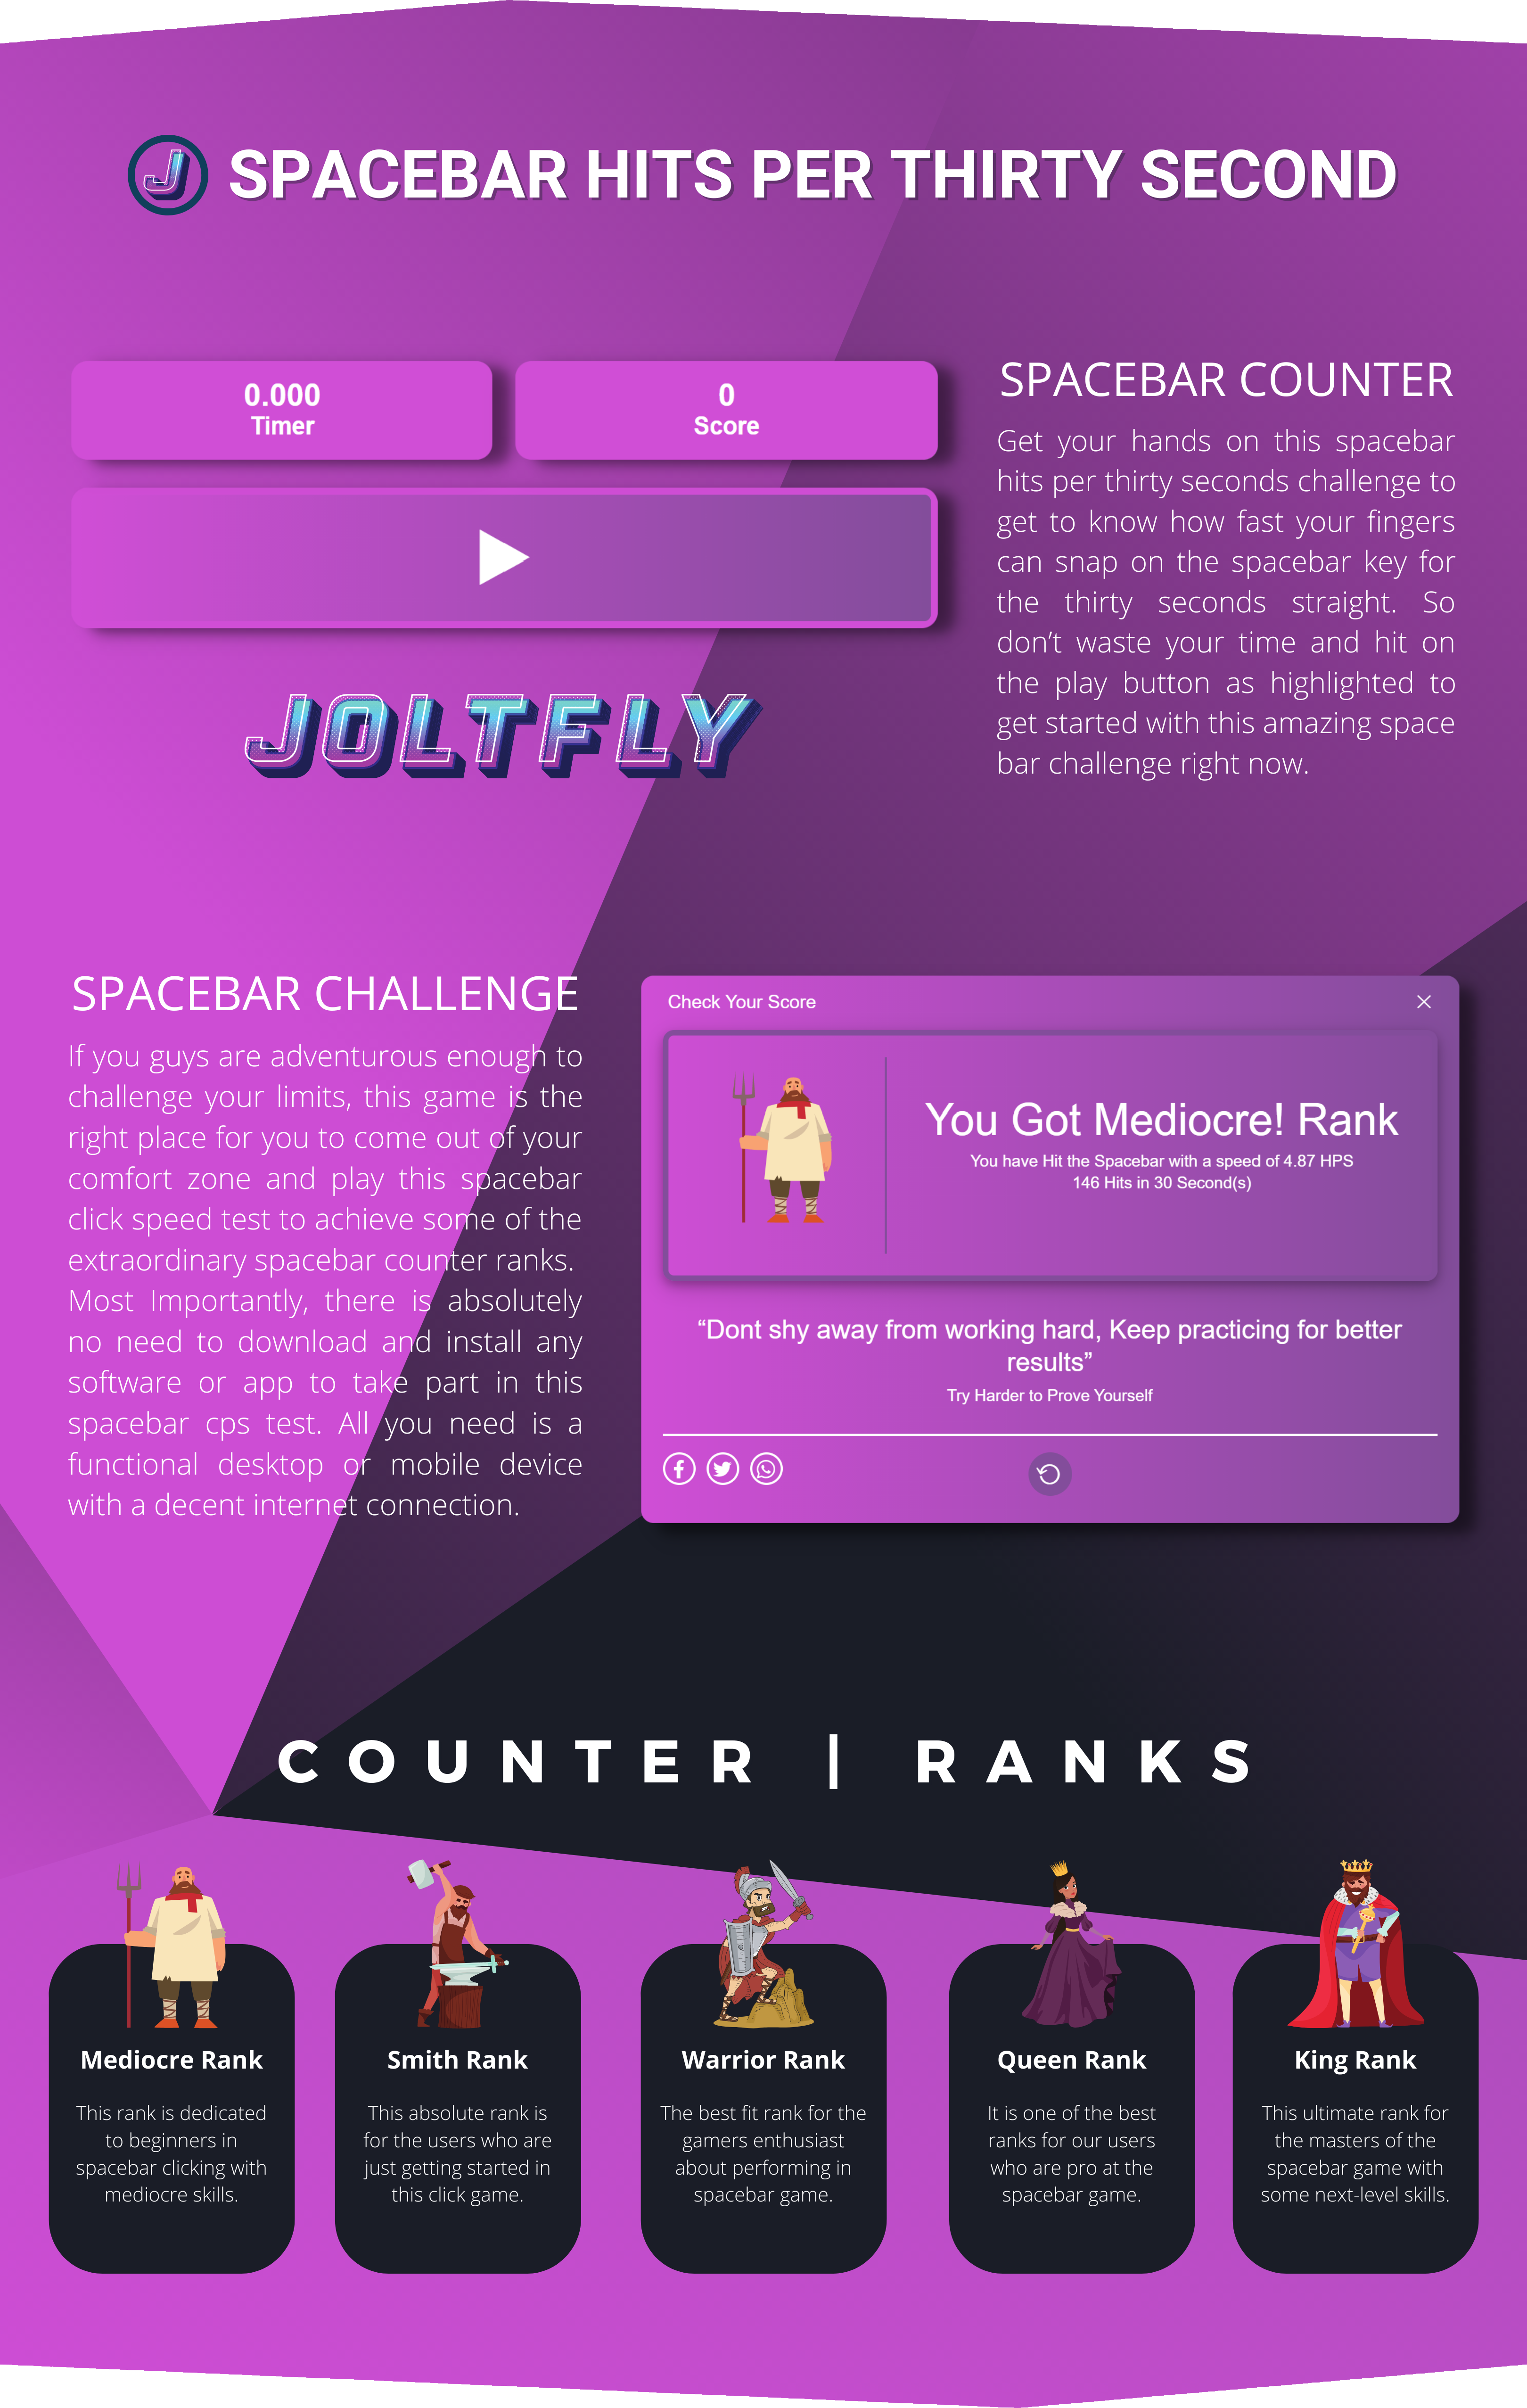 Spacebar 100 Hits Score Challenge - Joltfly